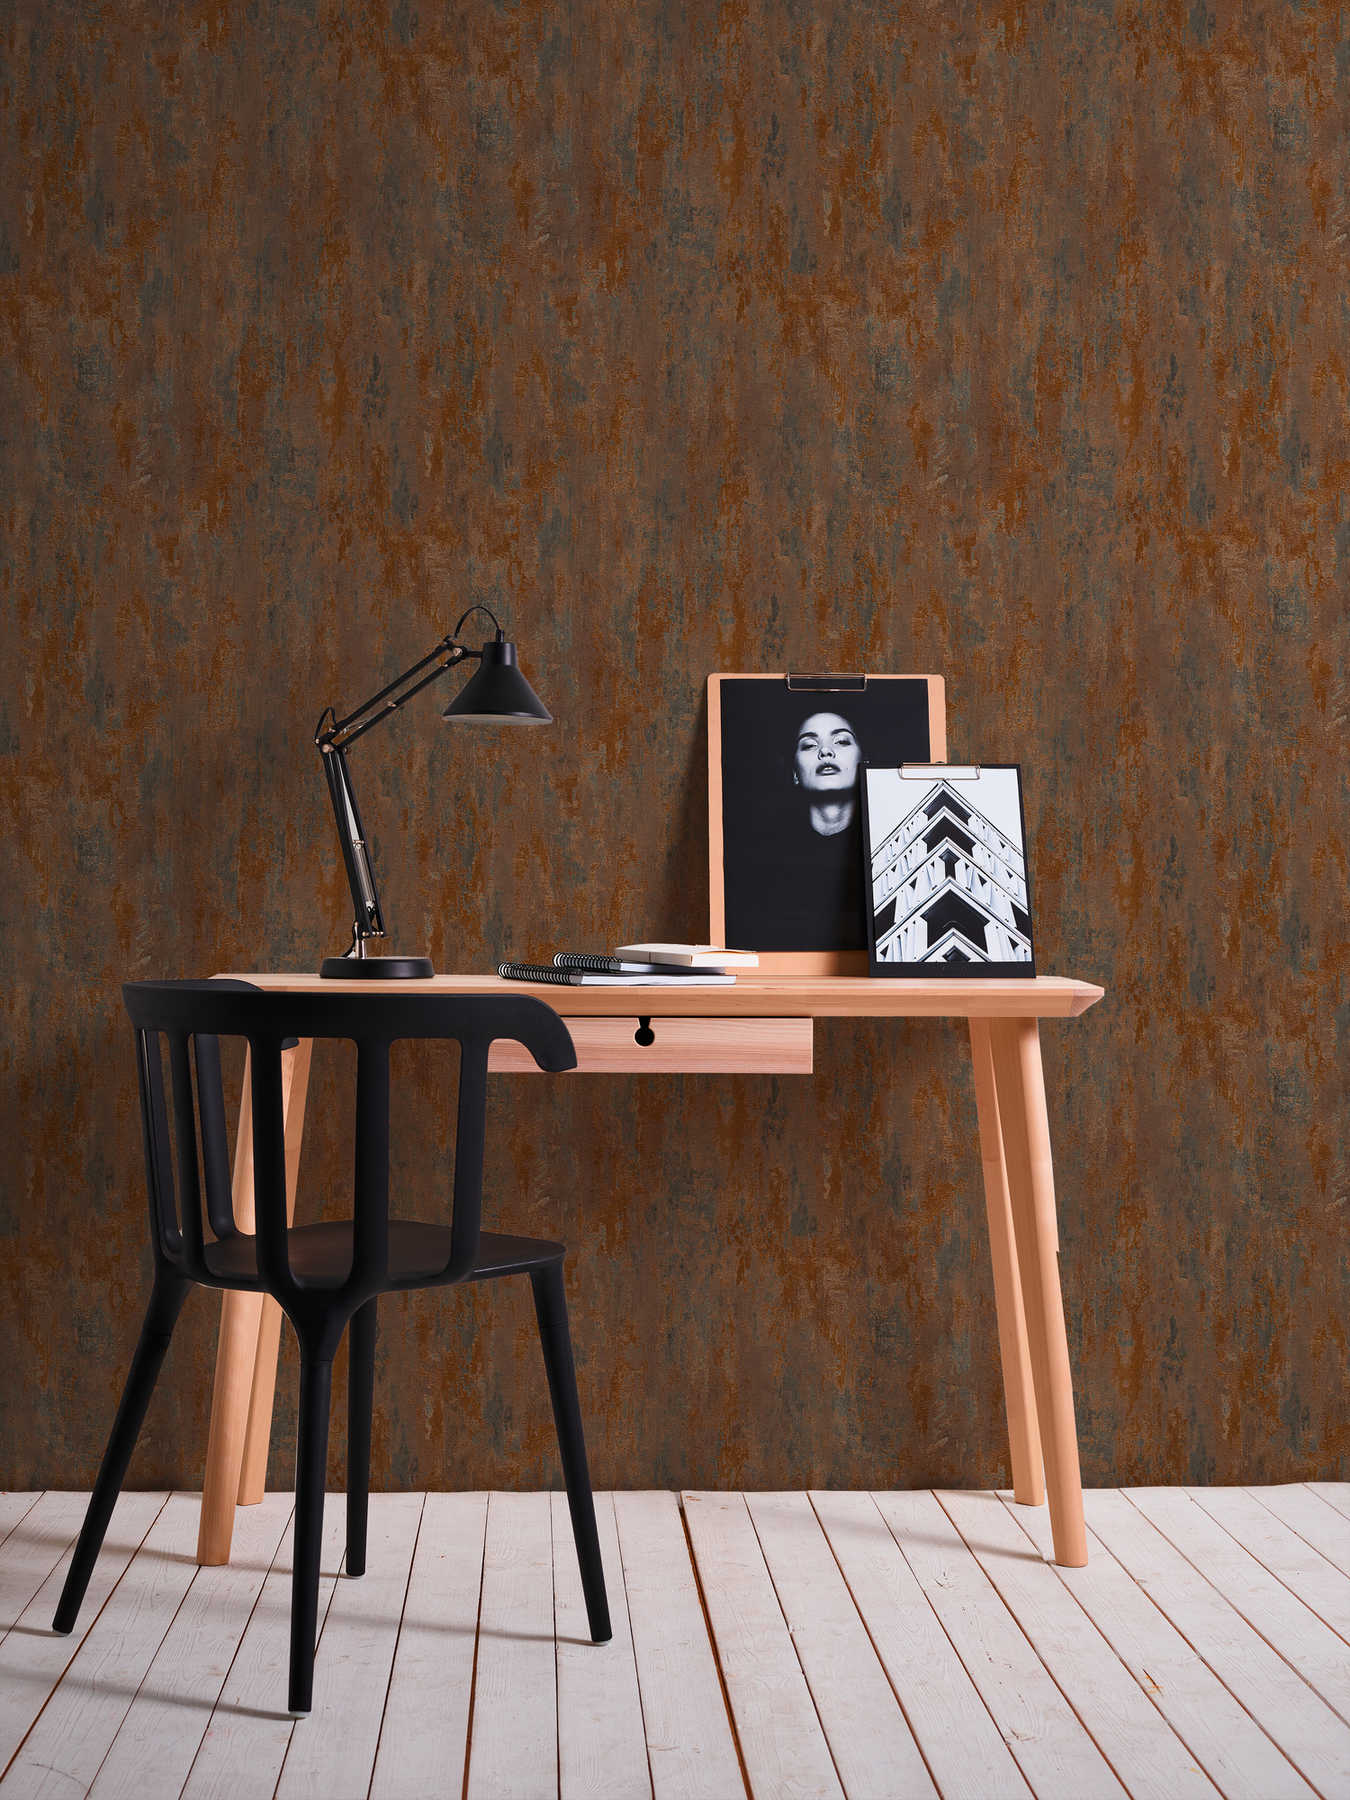             Wallpaper rust & metallic effect in industrial style - orange, copper, brown
        